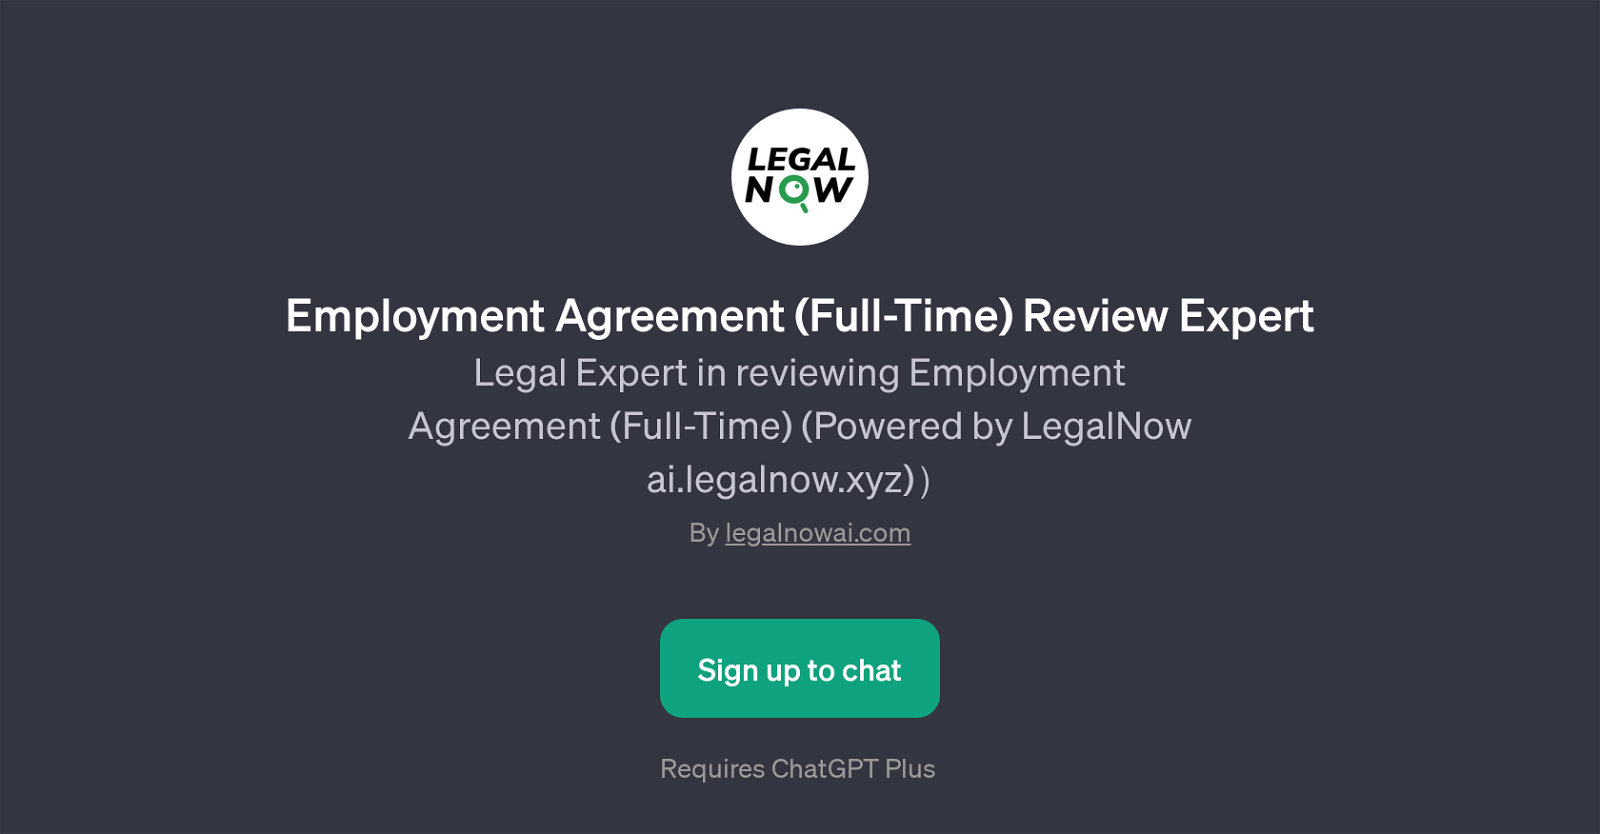 Employment Agreement (Full-Time) Review Expert website